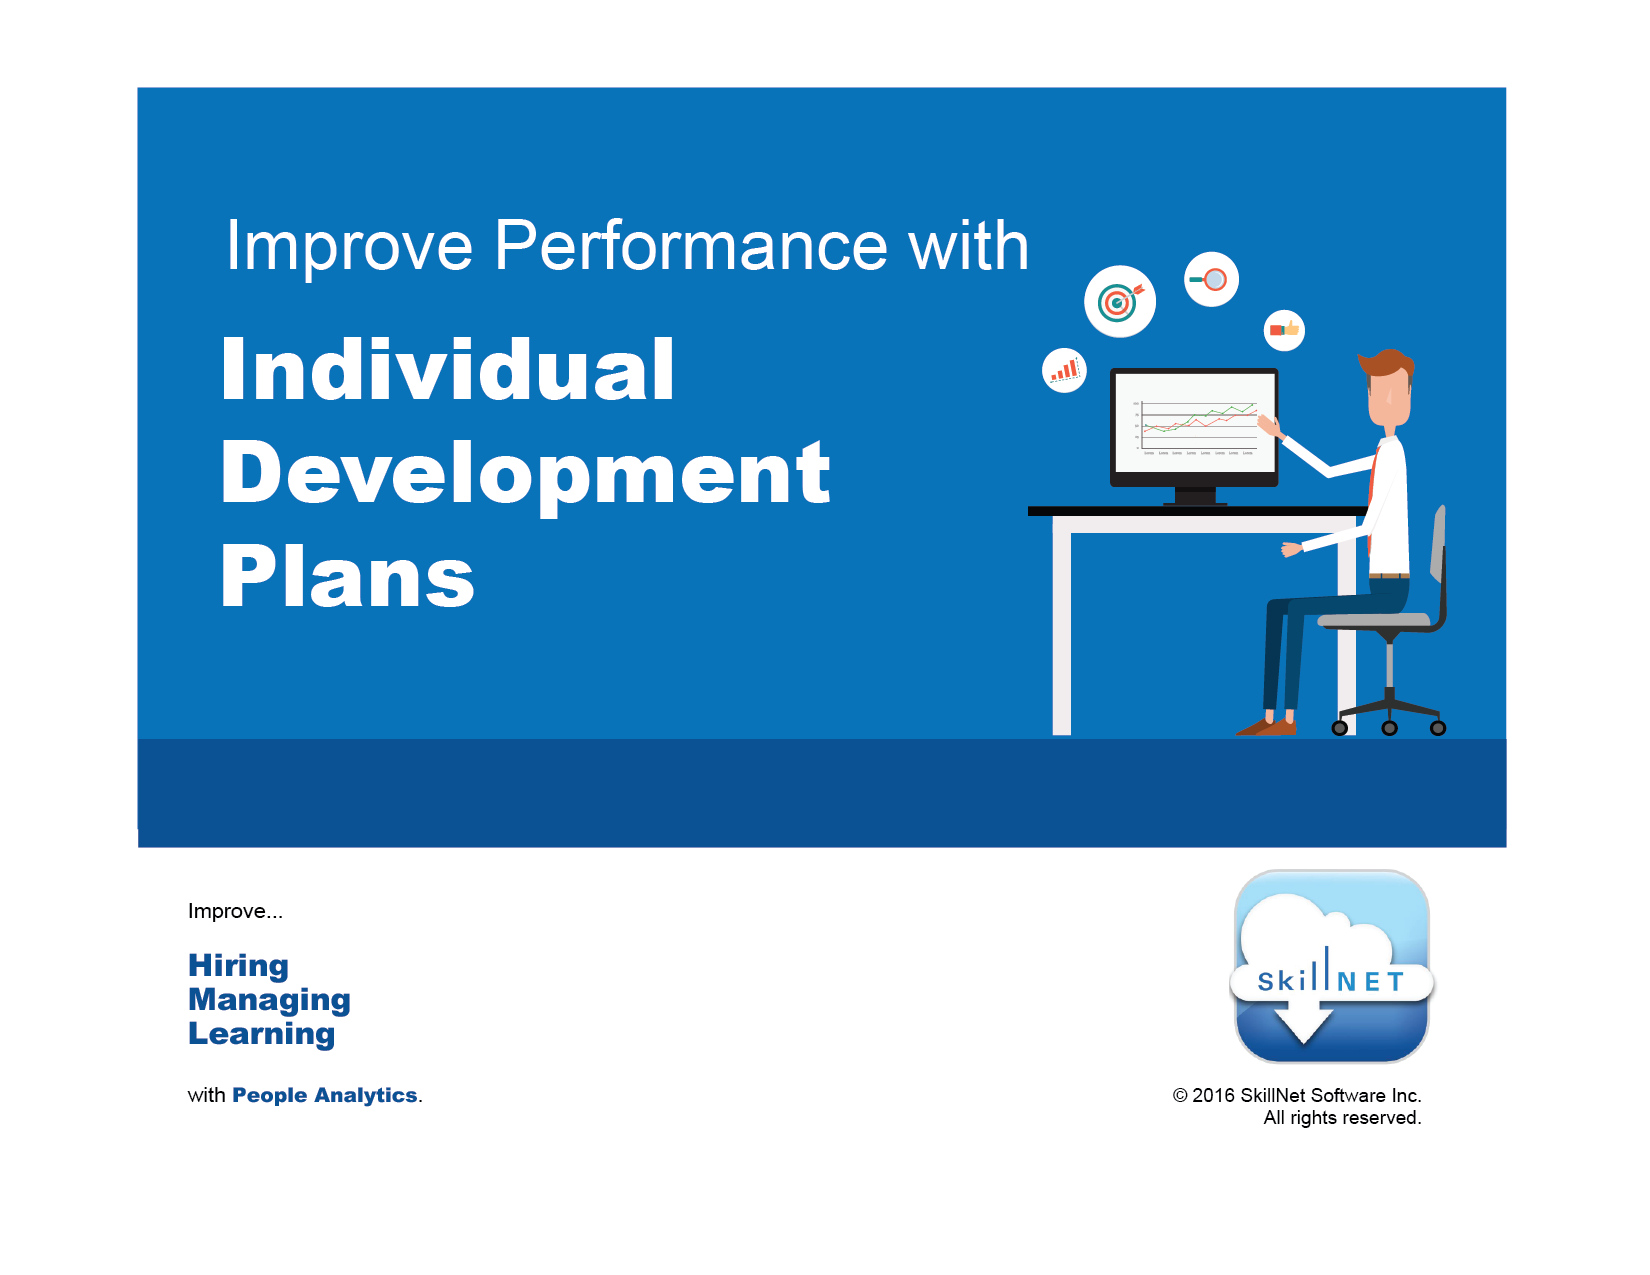 Individual Development Plans